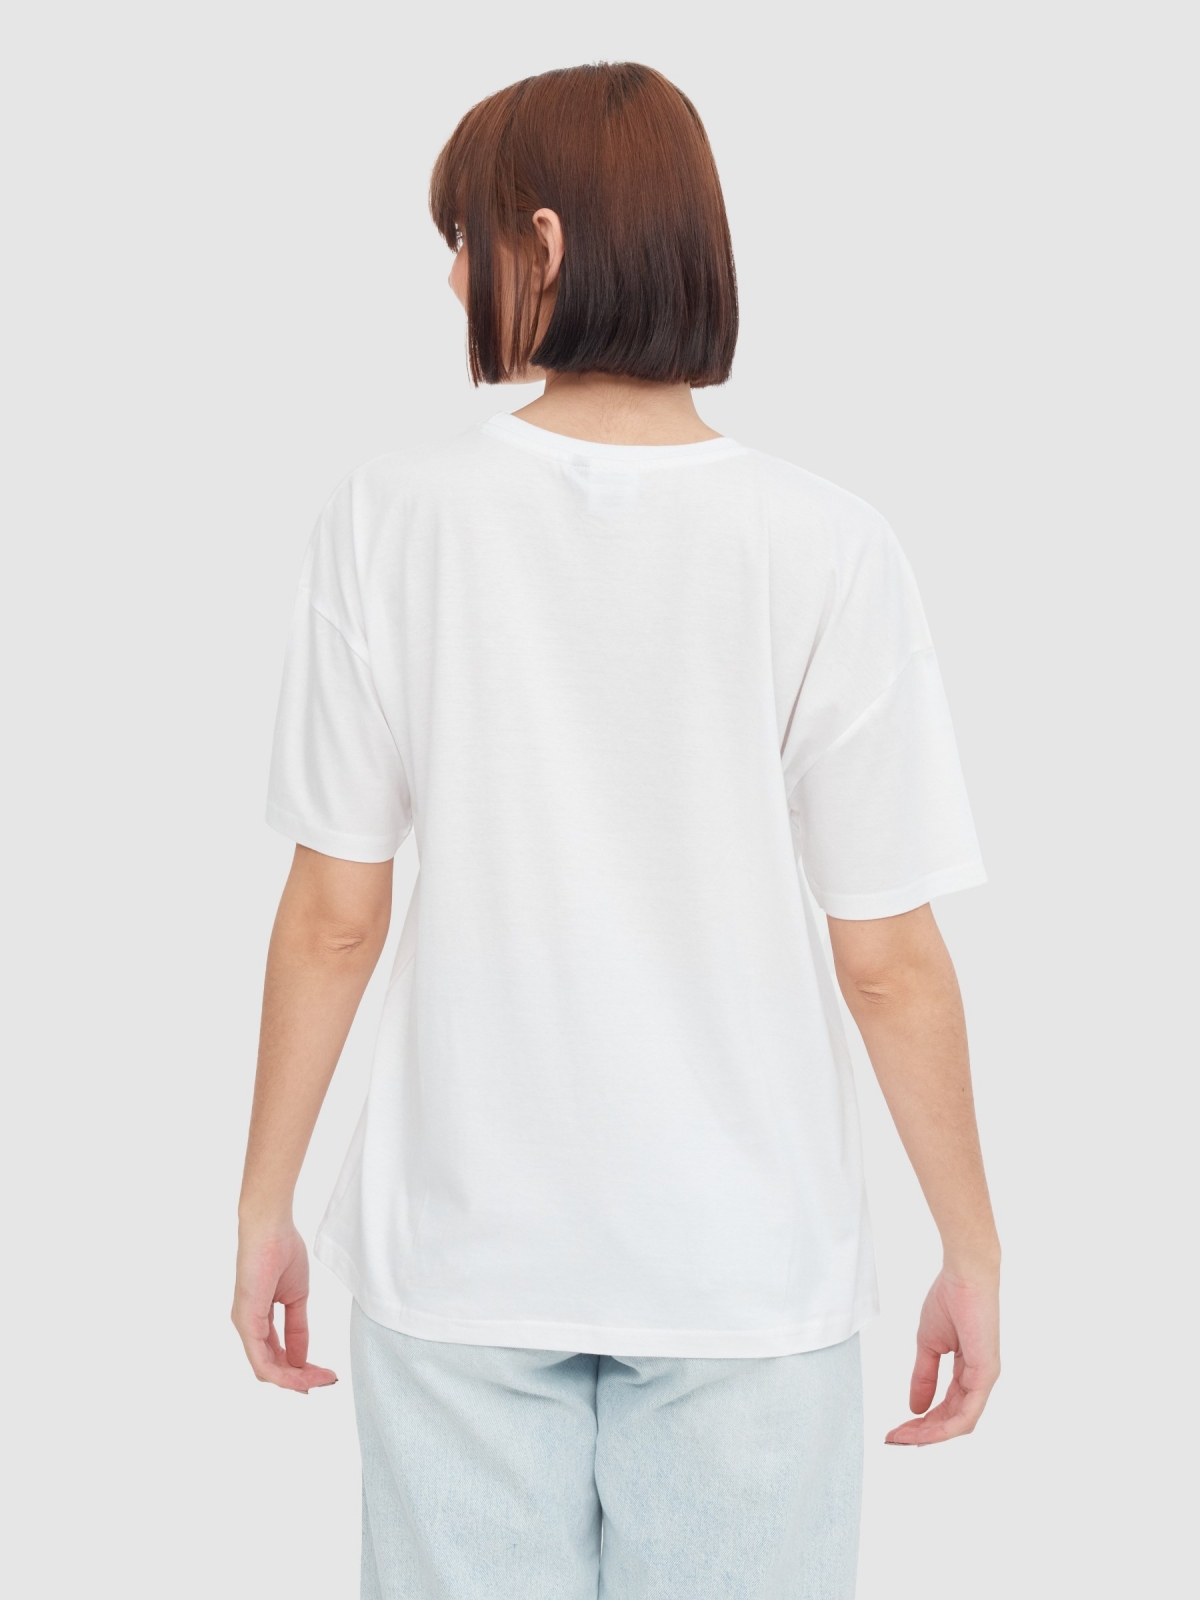 Camiseta oversize Maggie Simpson blanco vista media trasera